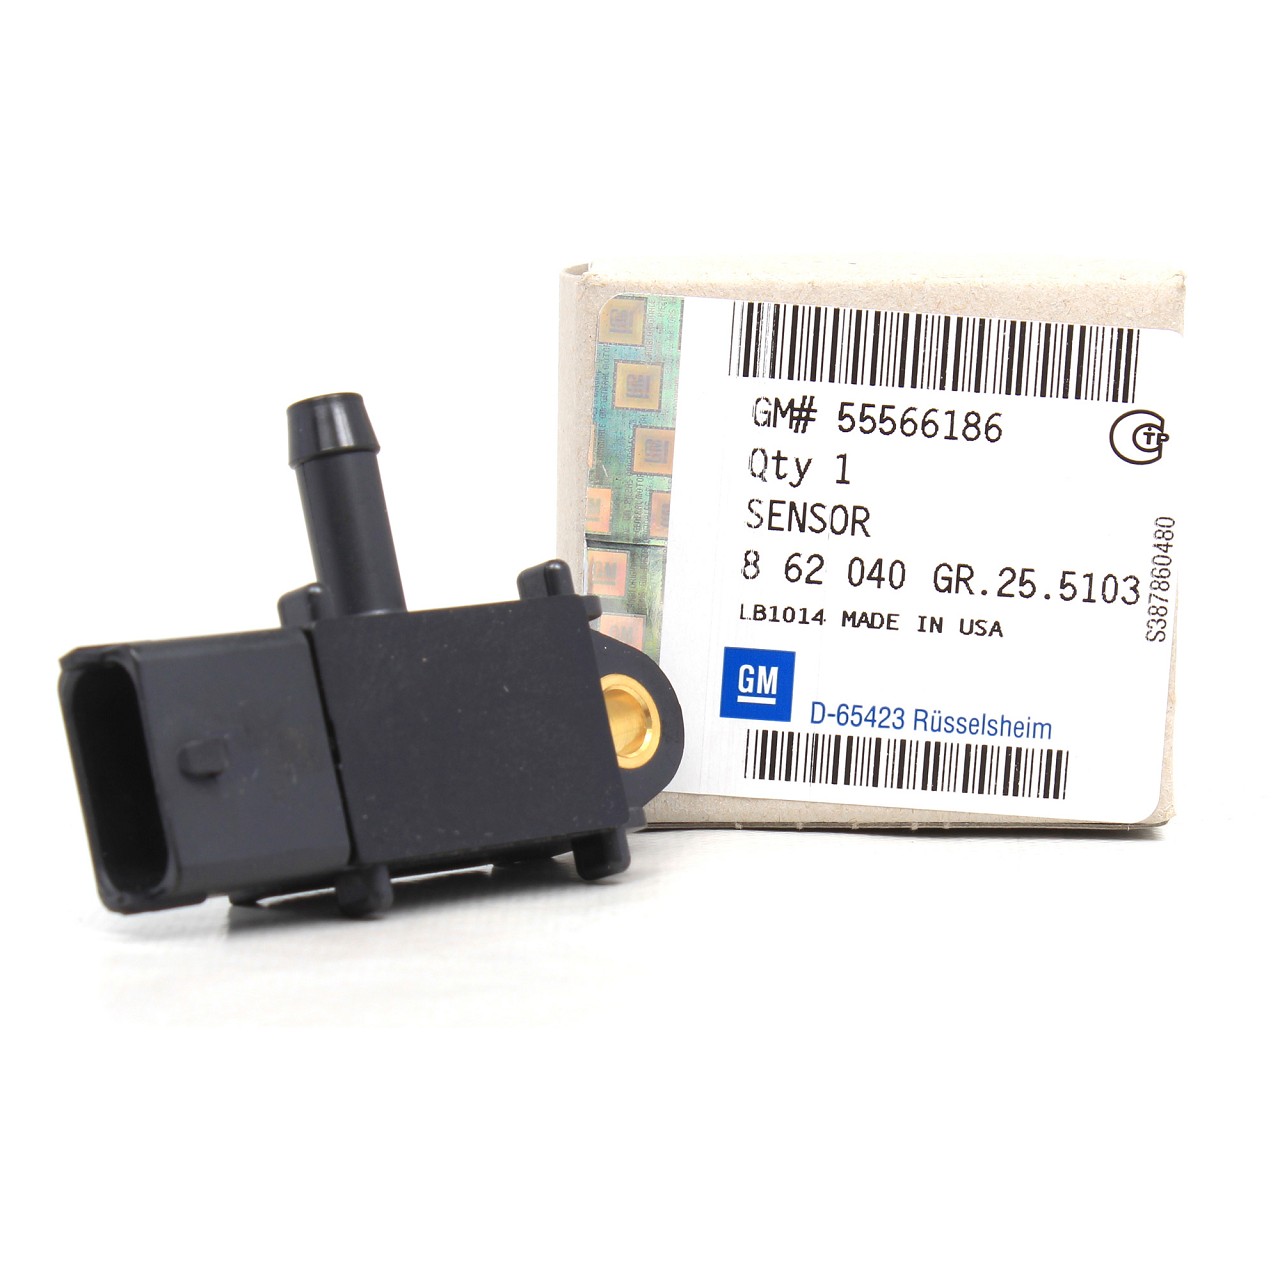 ORIGINAL GM Opel Abgasdrucksensoren Drucksensor Differenzdruck Sensor 862040